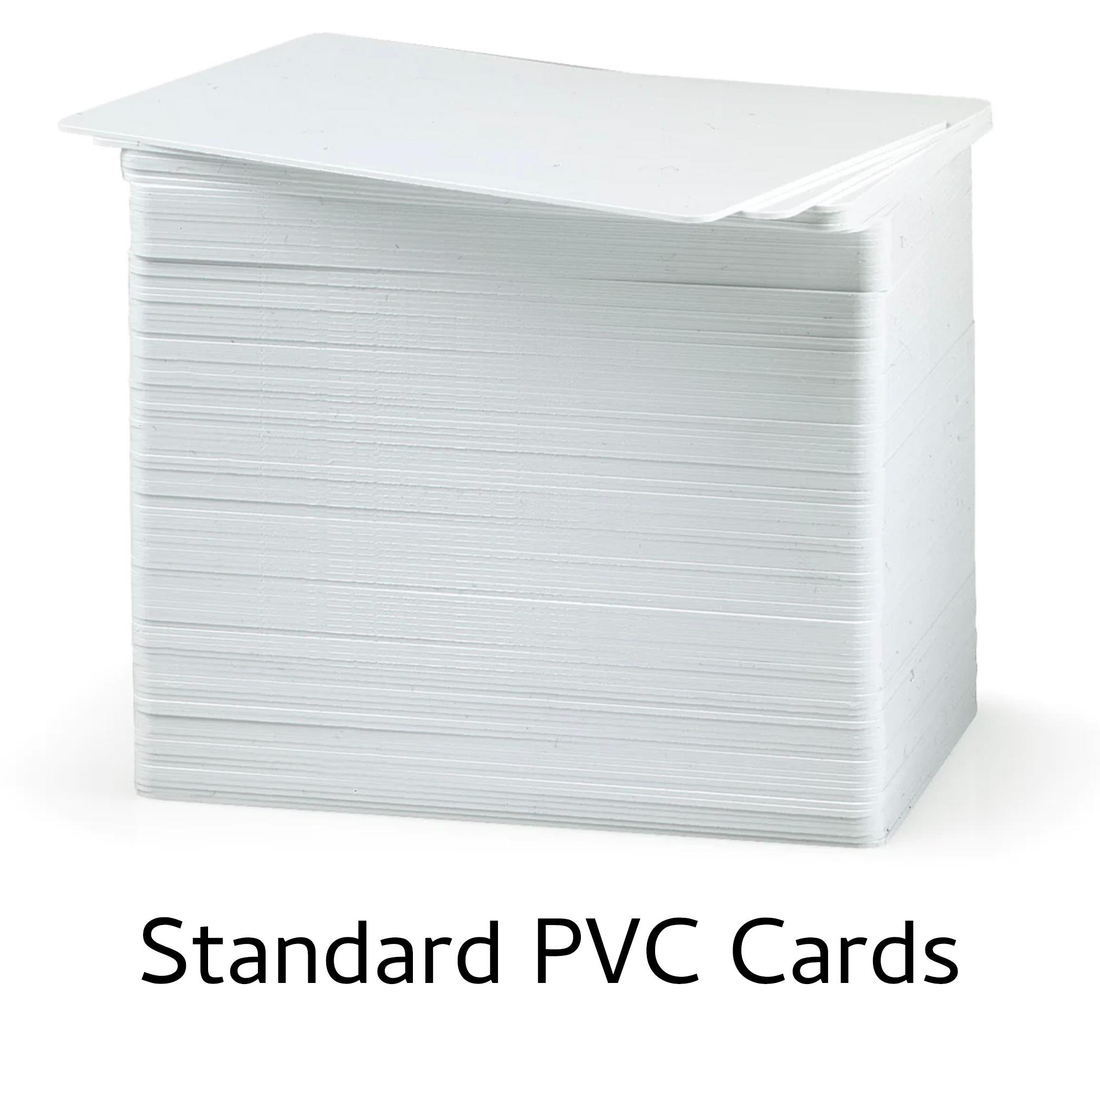  PVC Cards